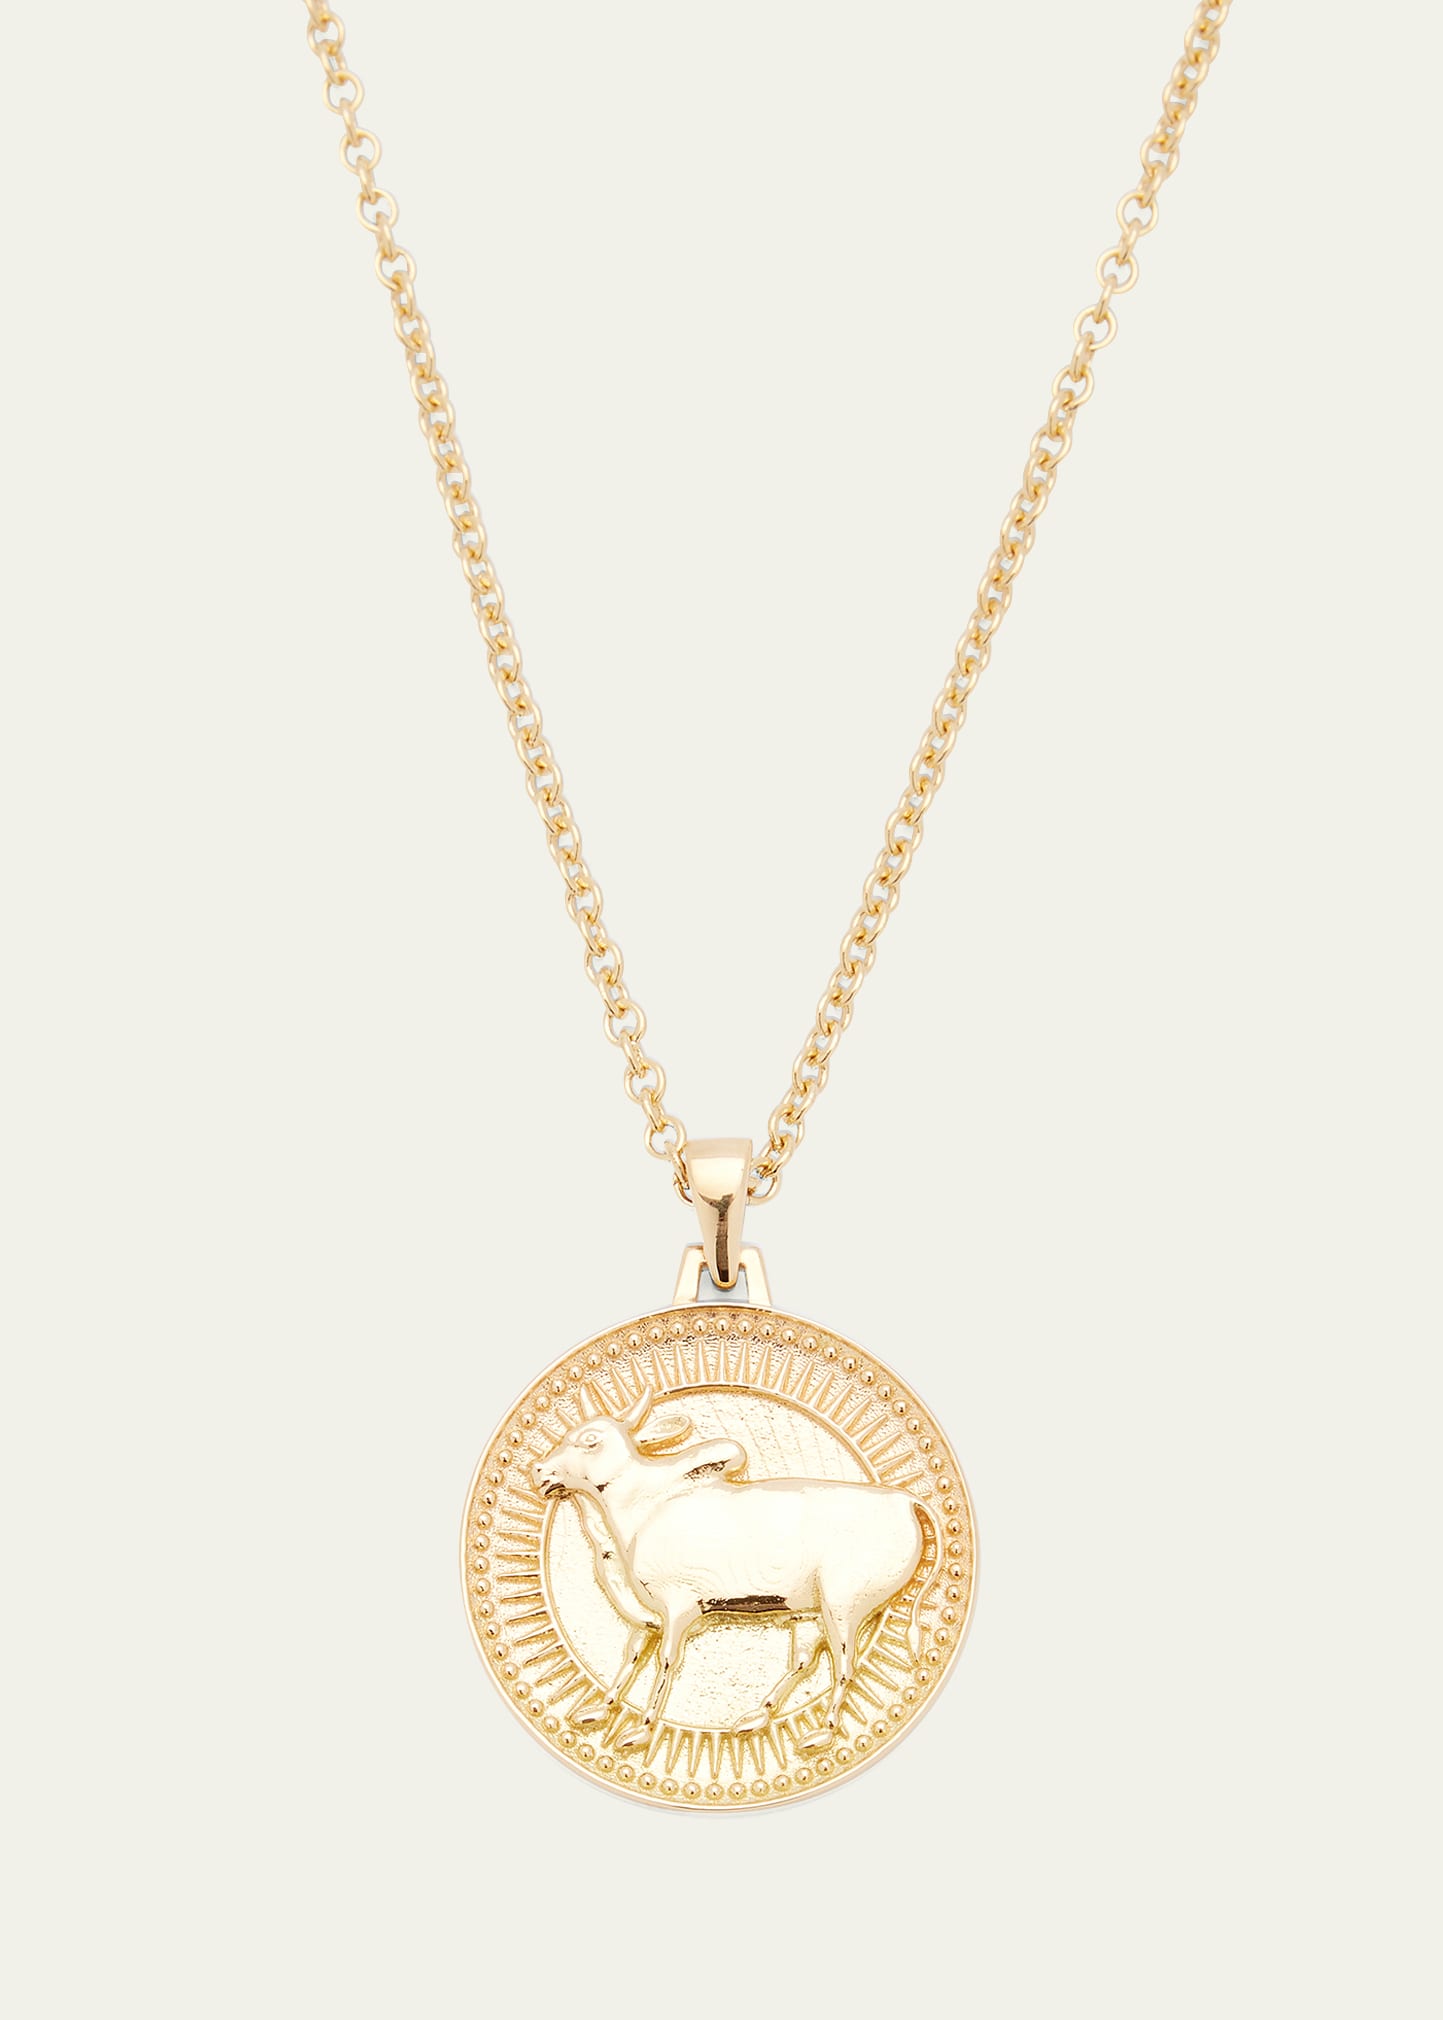 Futura Jewelry Fairmined Gold Taurus Necklace